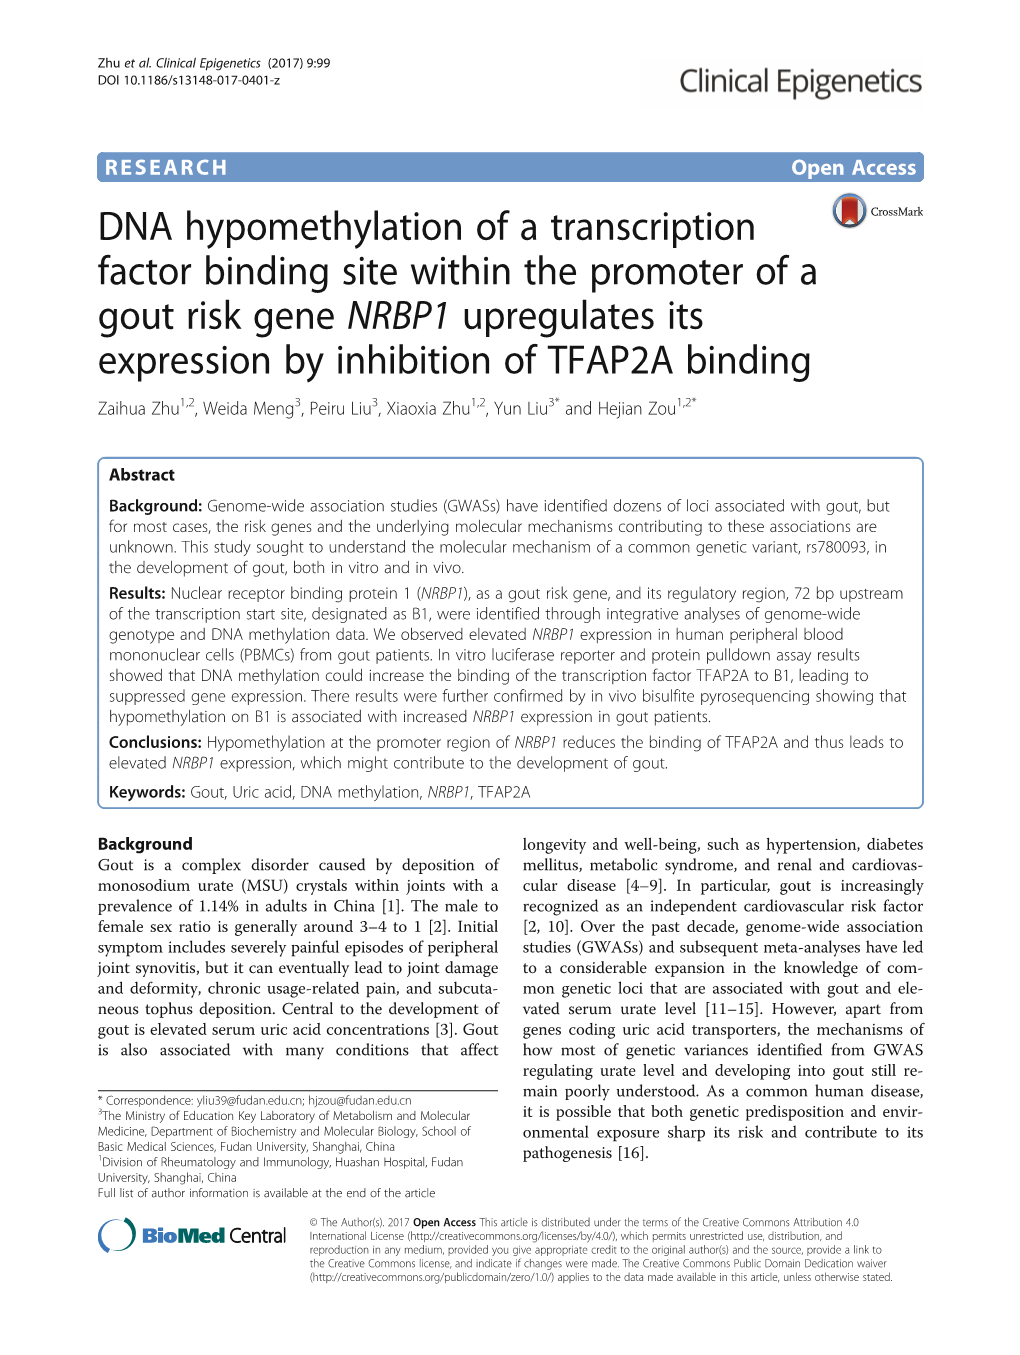 DNA Hypomethylation of a Transcription